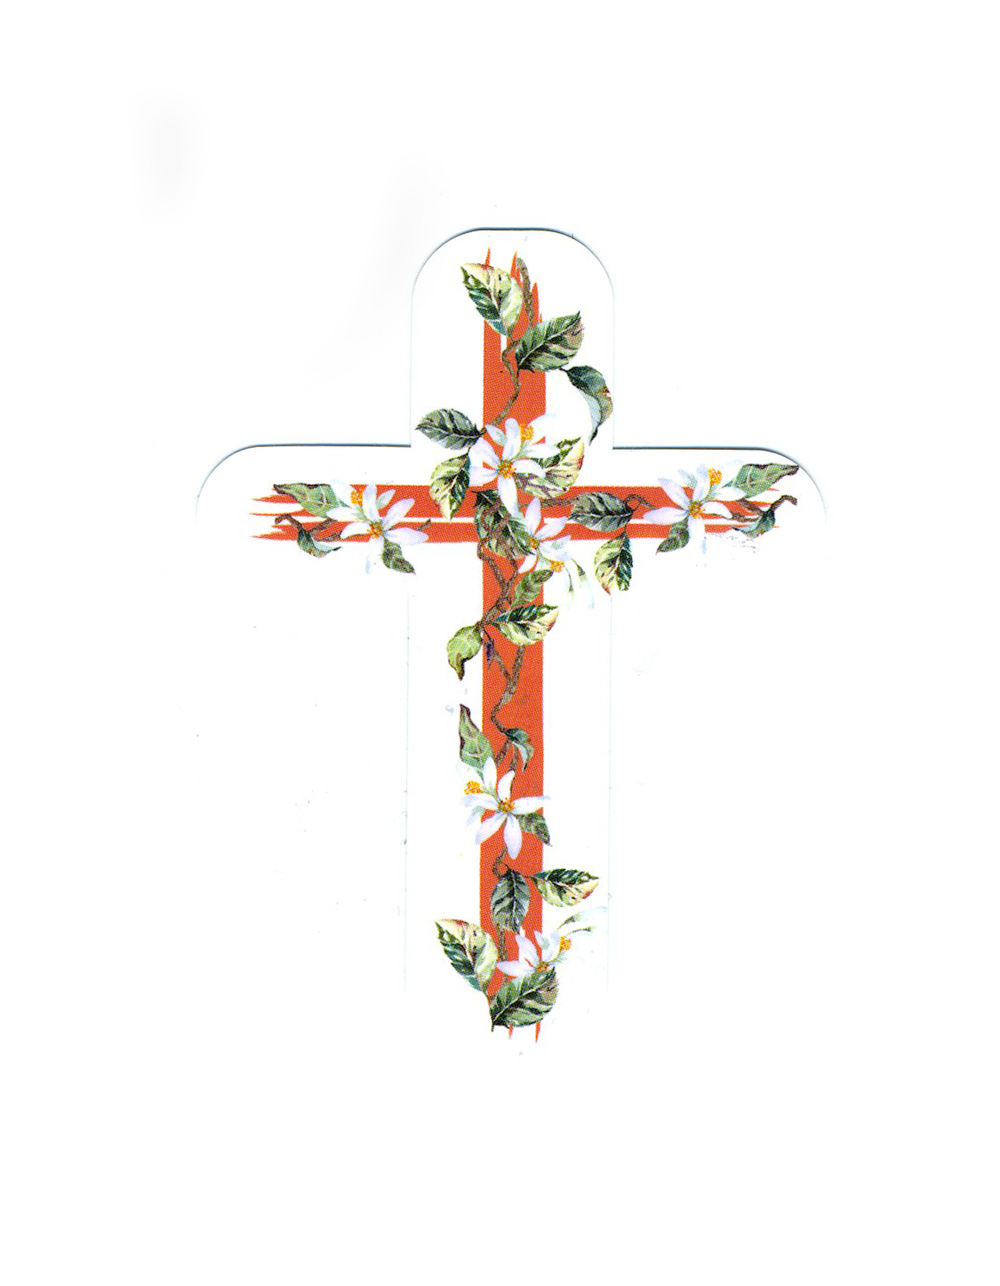 Floral Cross Sticker